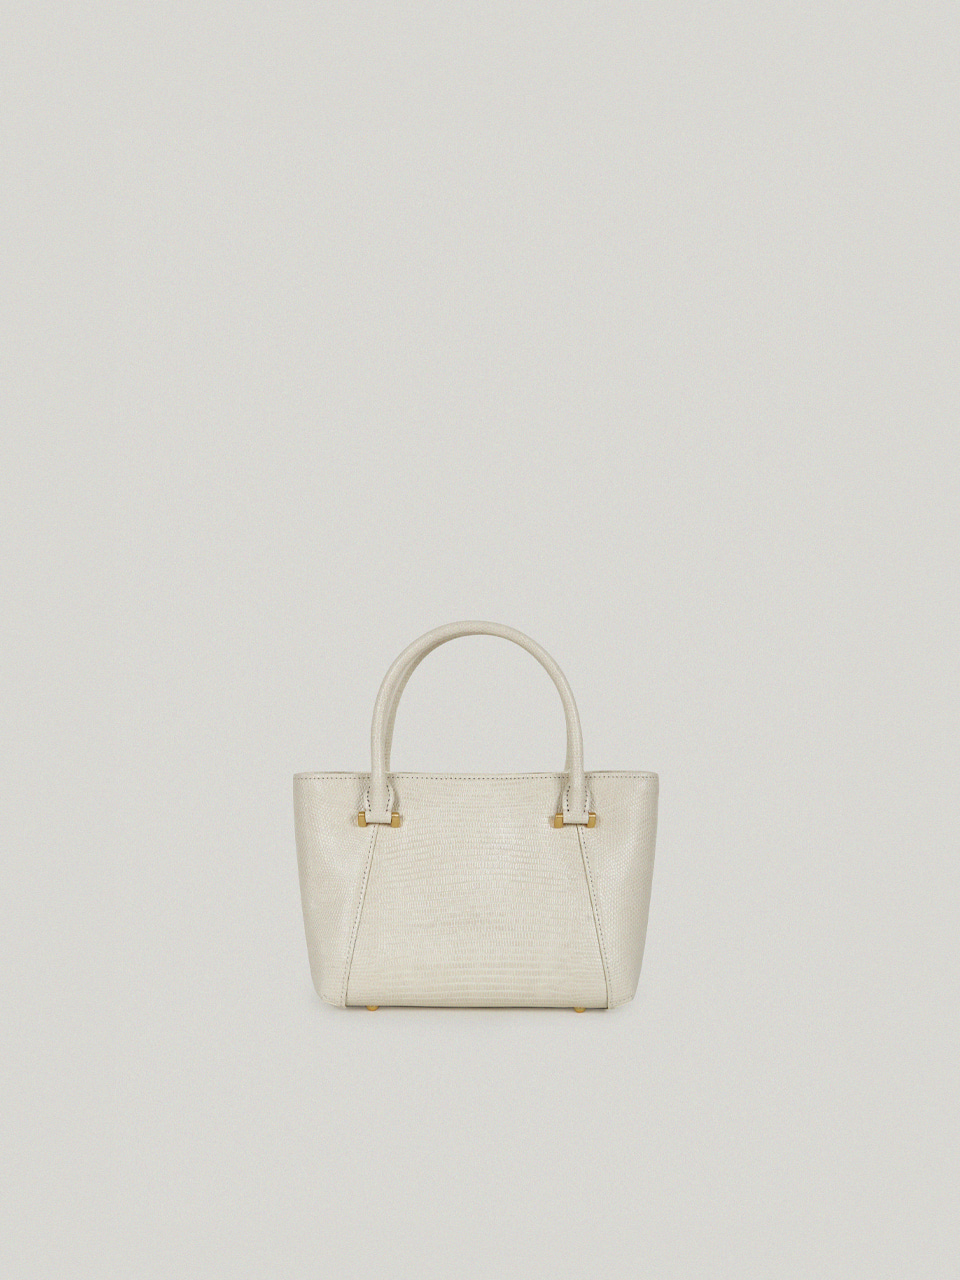 Gouter Bag / Pattern Ivory